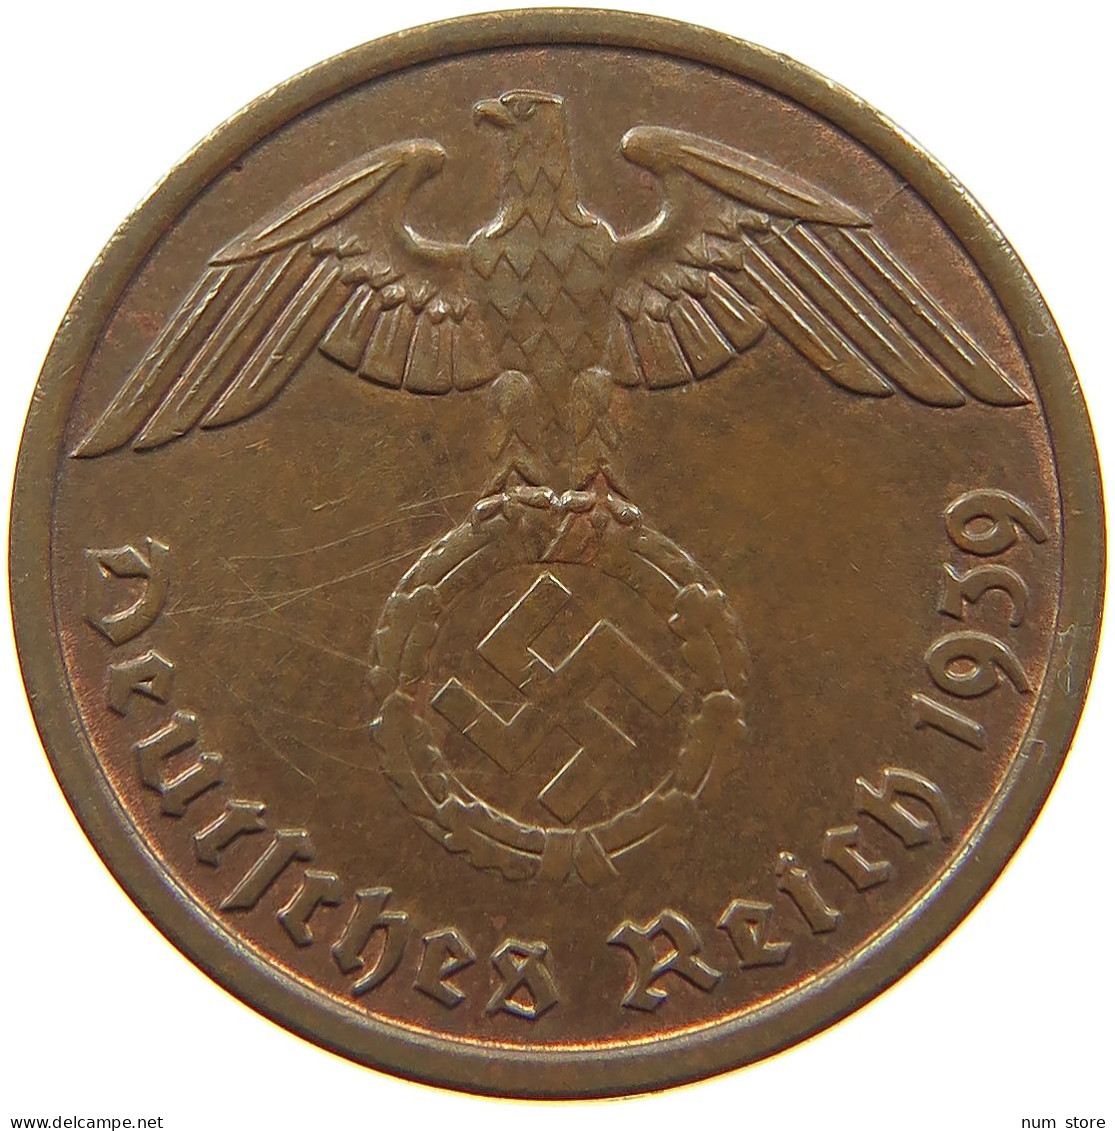 GERMANY 2 PFENNIG 1939 A #c083 0029 - 2 Reichspfennig